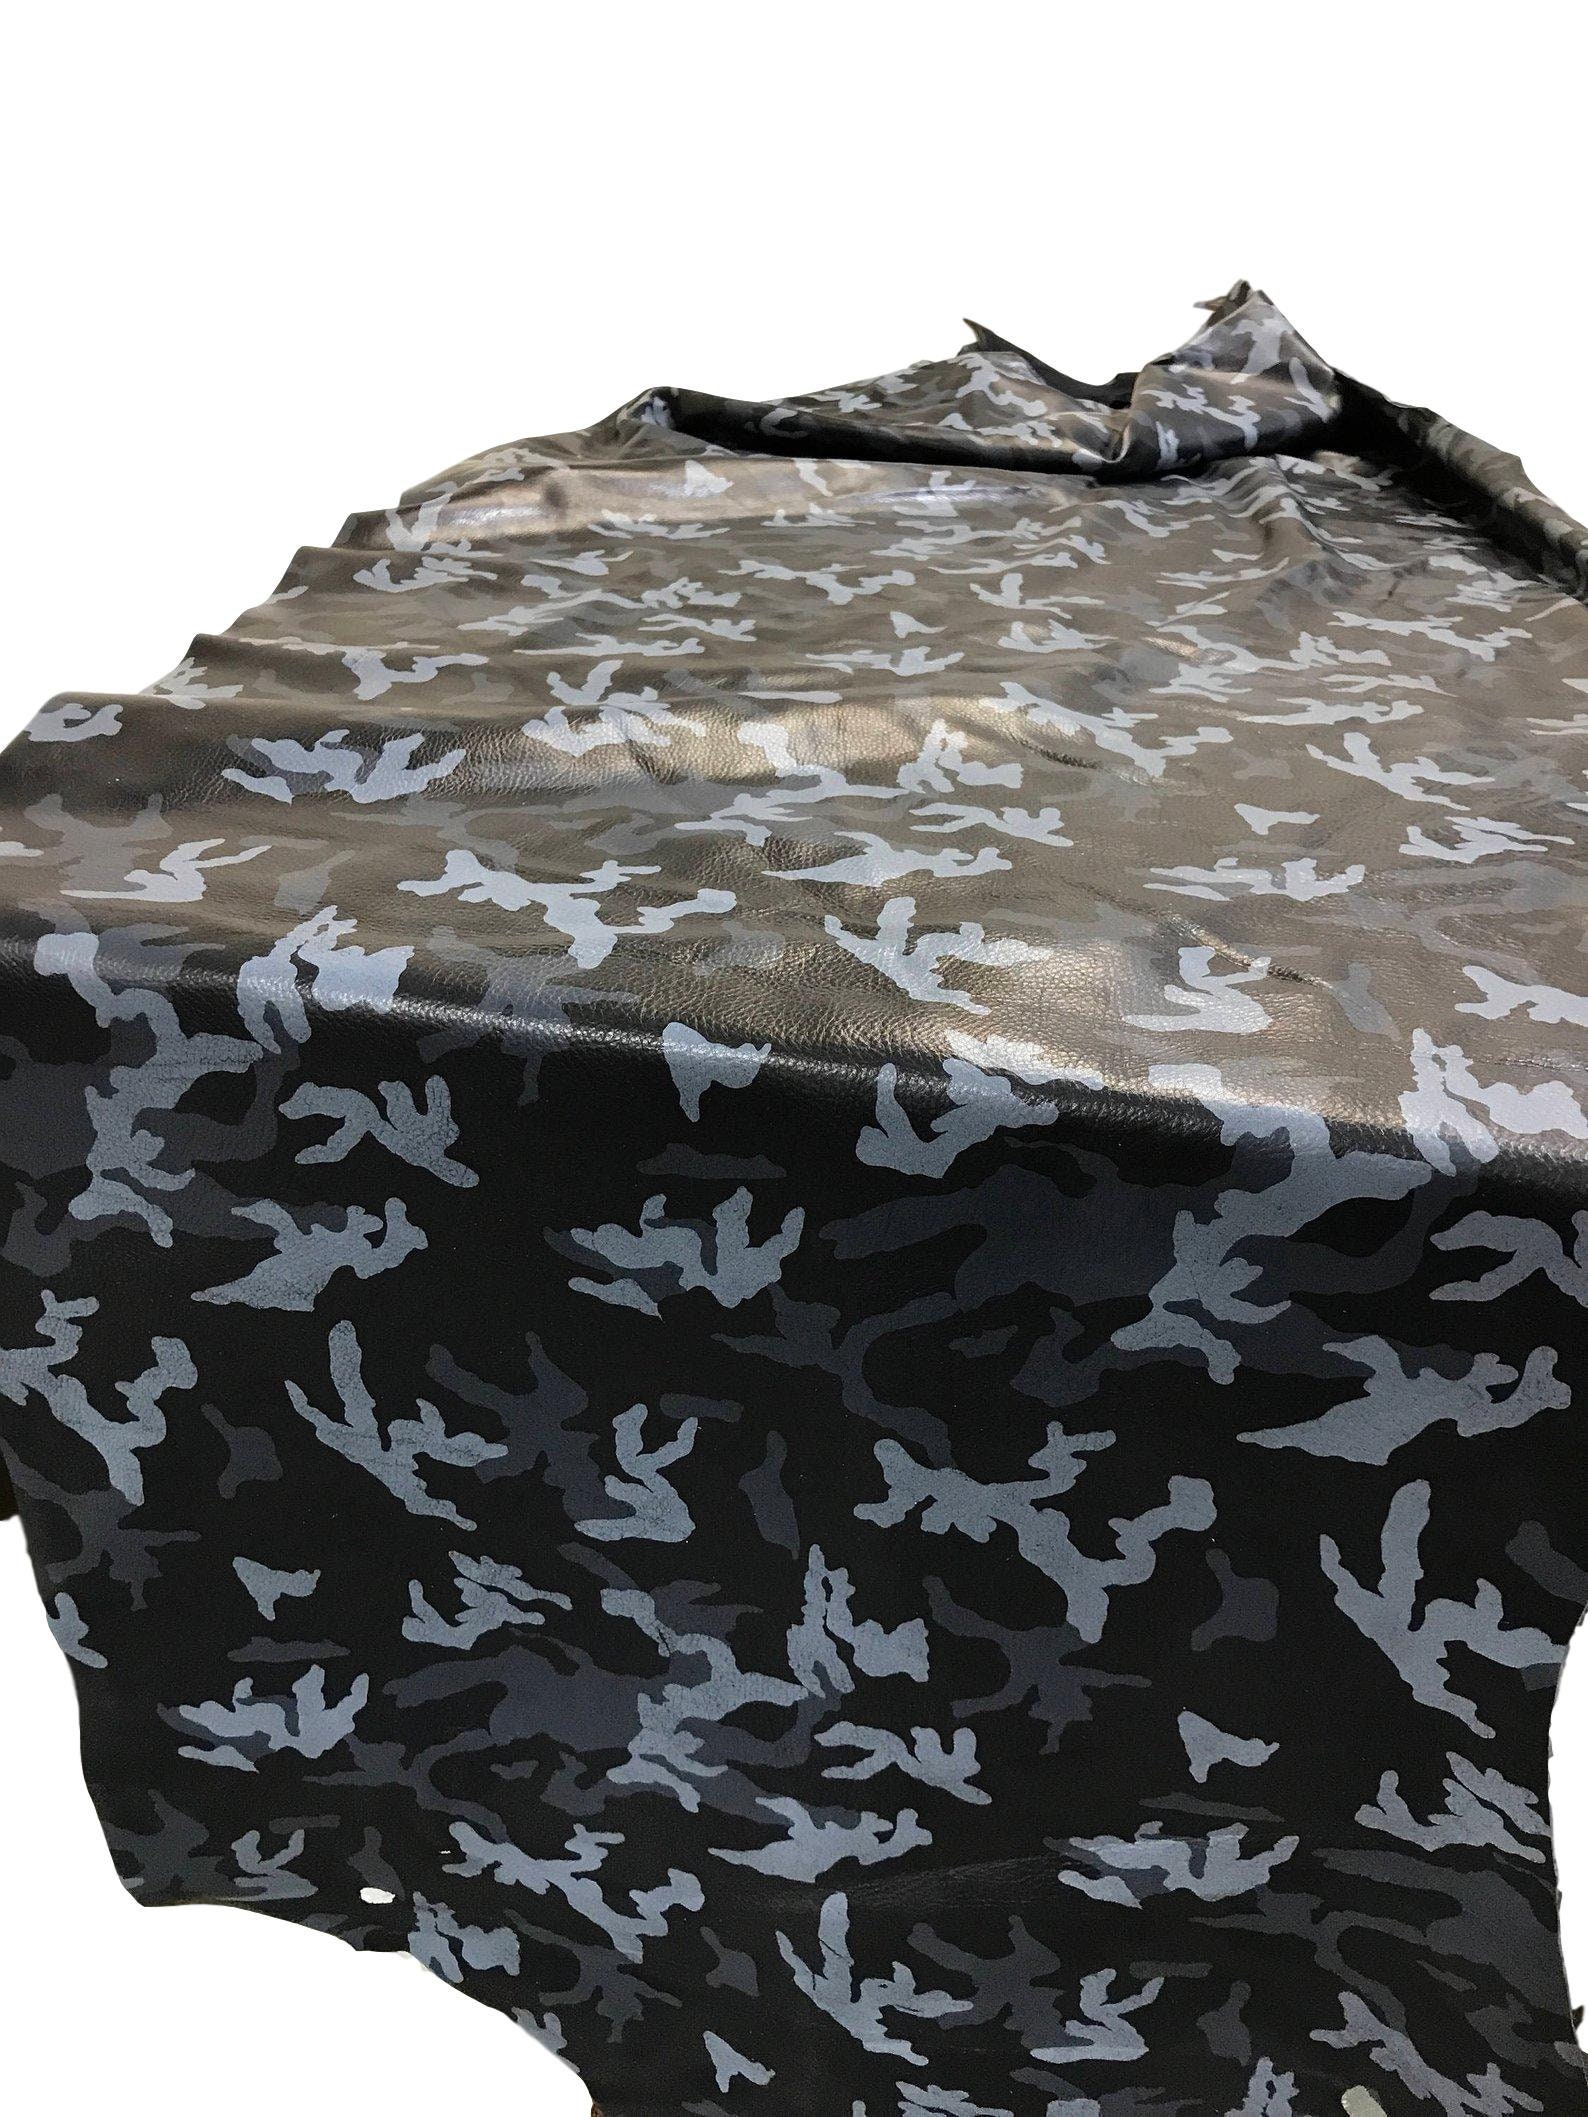 Army Fatigue Fabric 